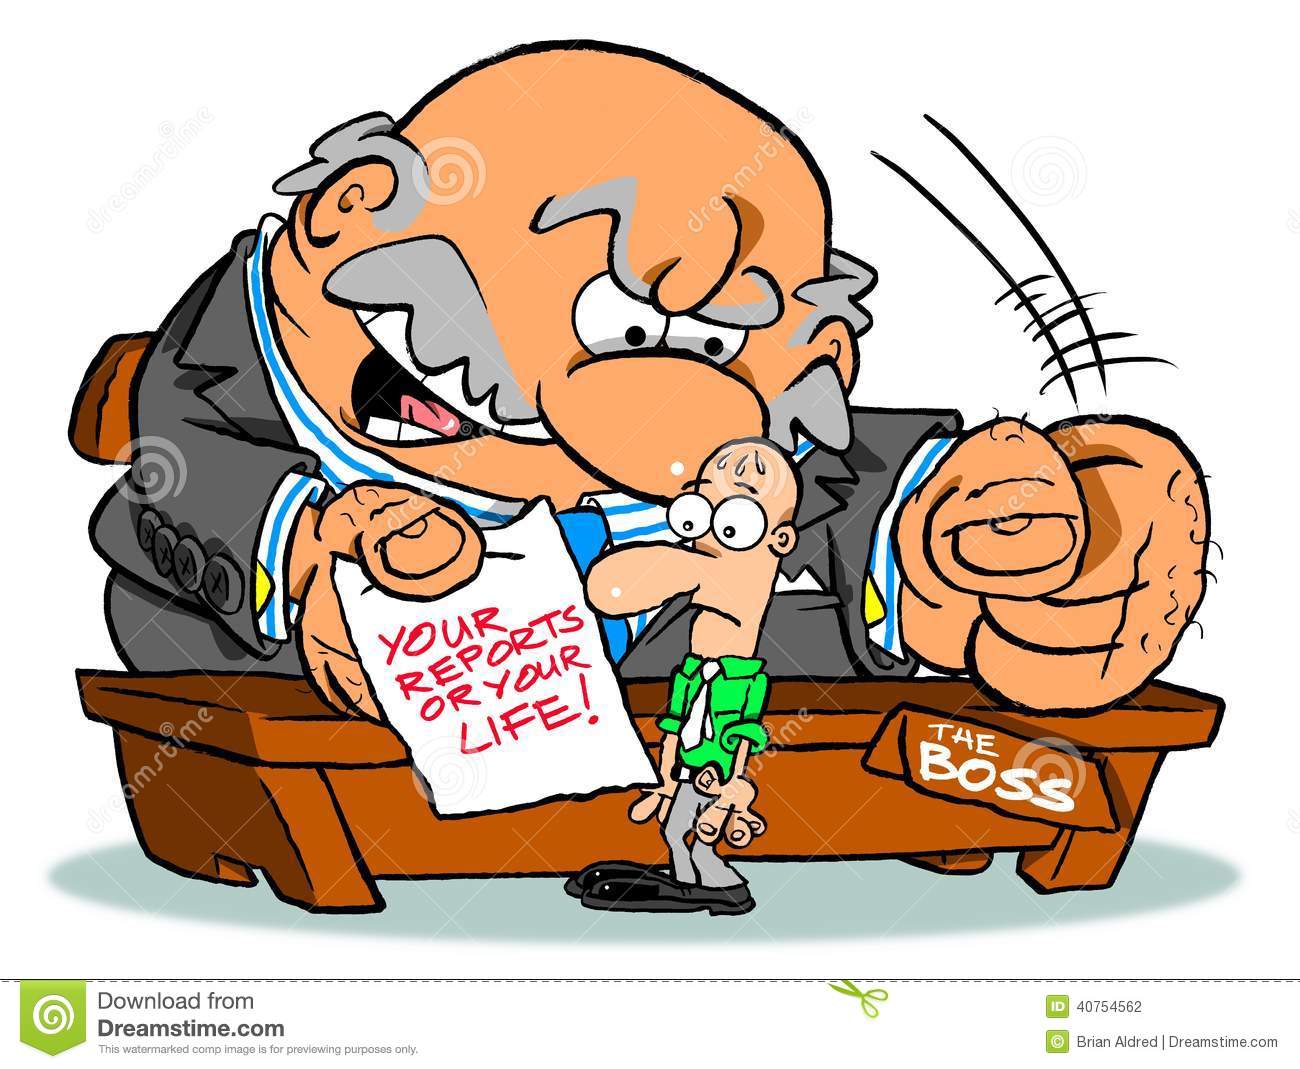 Cartoon Illustration Of An Angry Boss Banging Desk And Shouting At